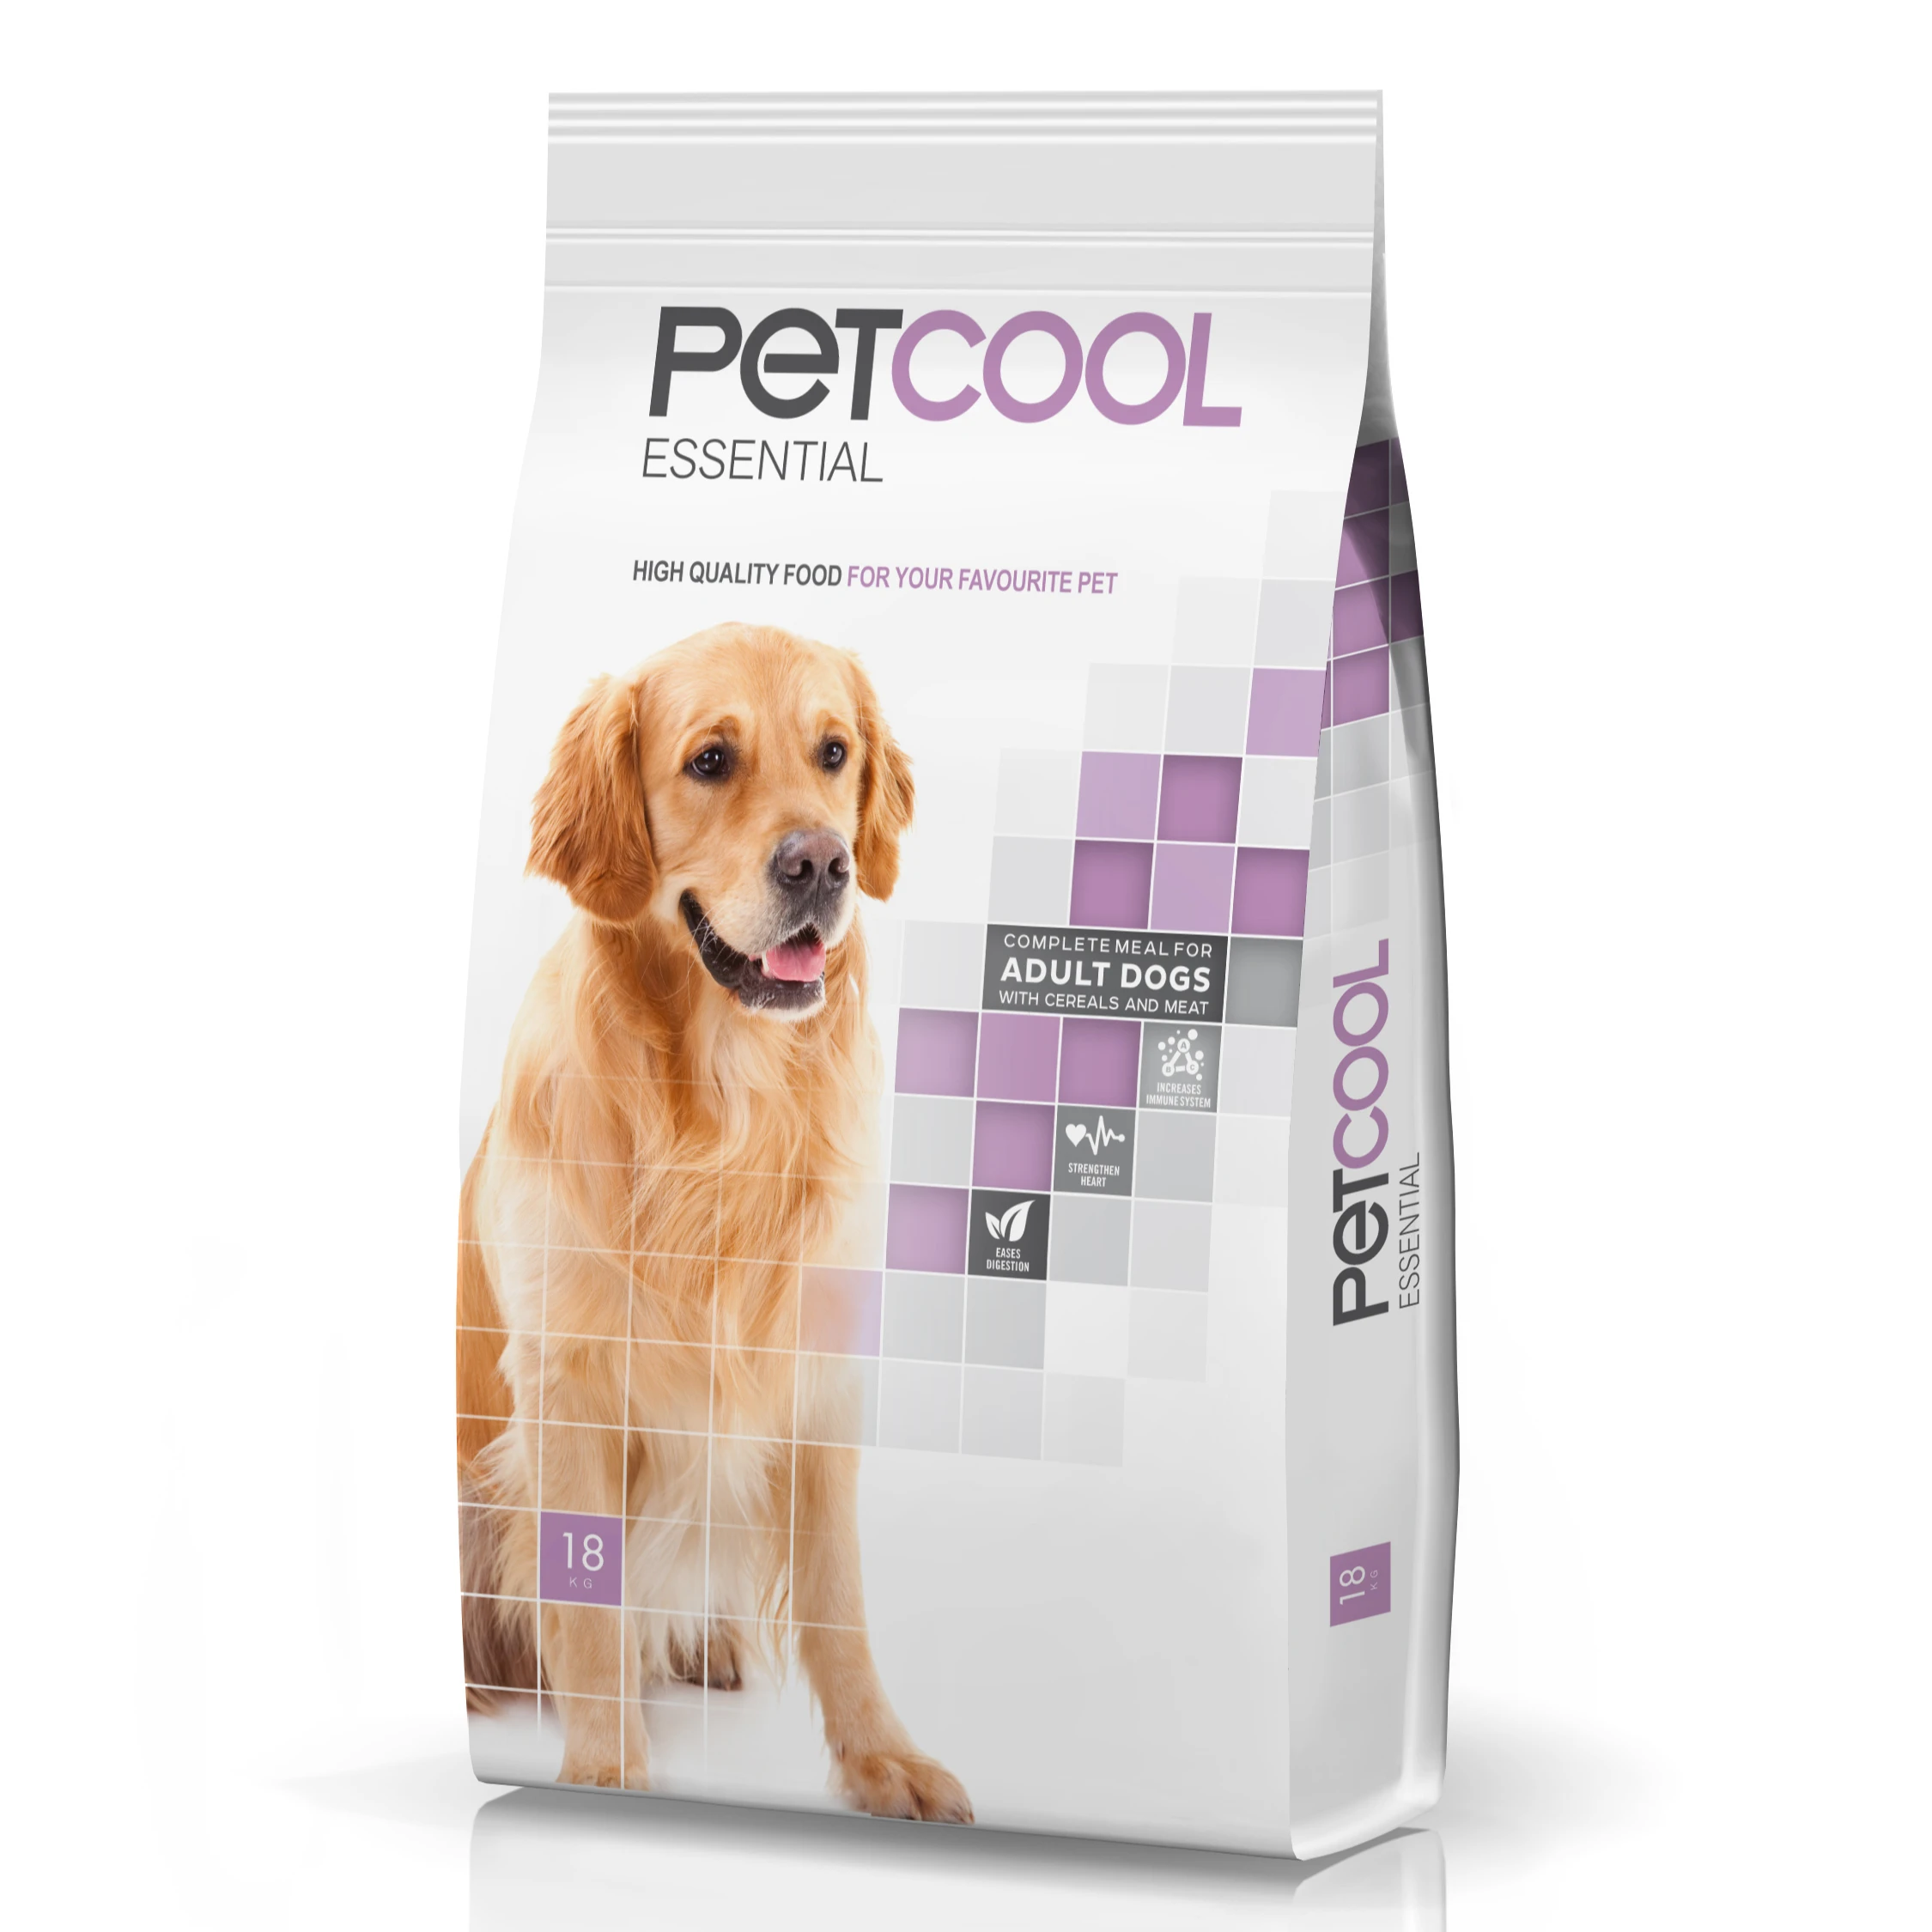 compra en nuestra tienda online: Perrarina Pet Cool essential 18kg (Adultos)